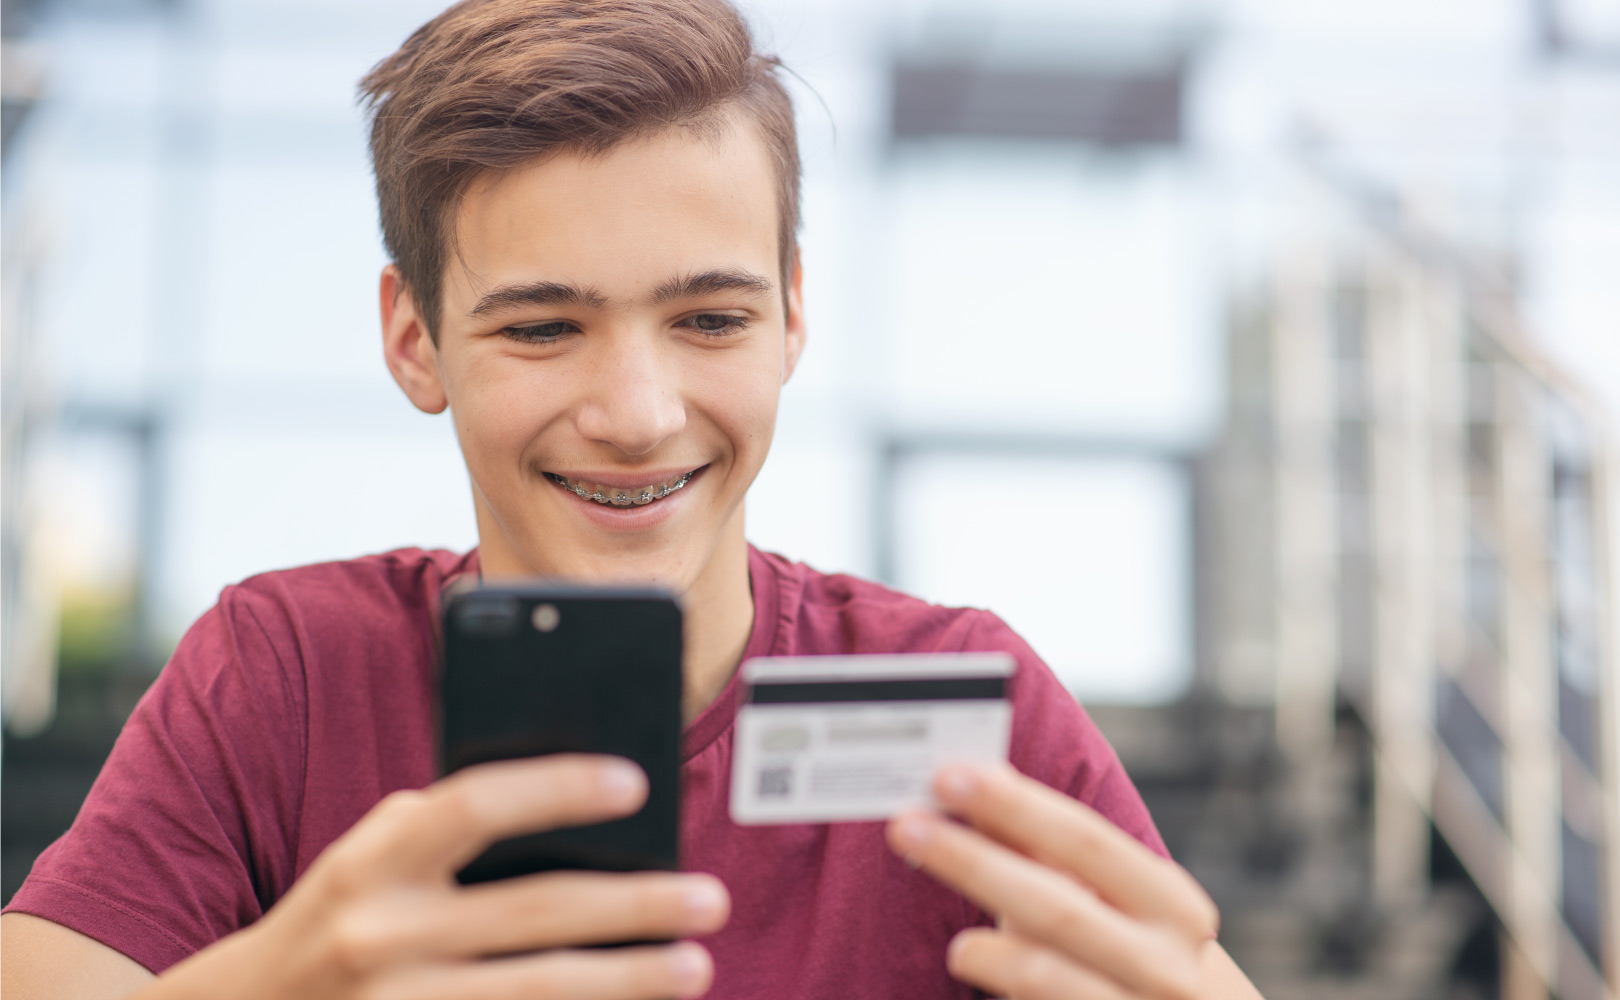 teenage boy using a credit card and phone